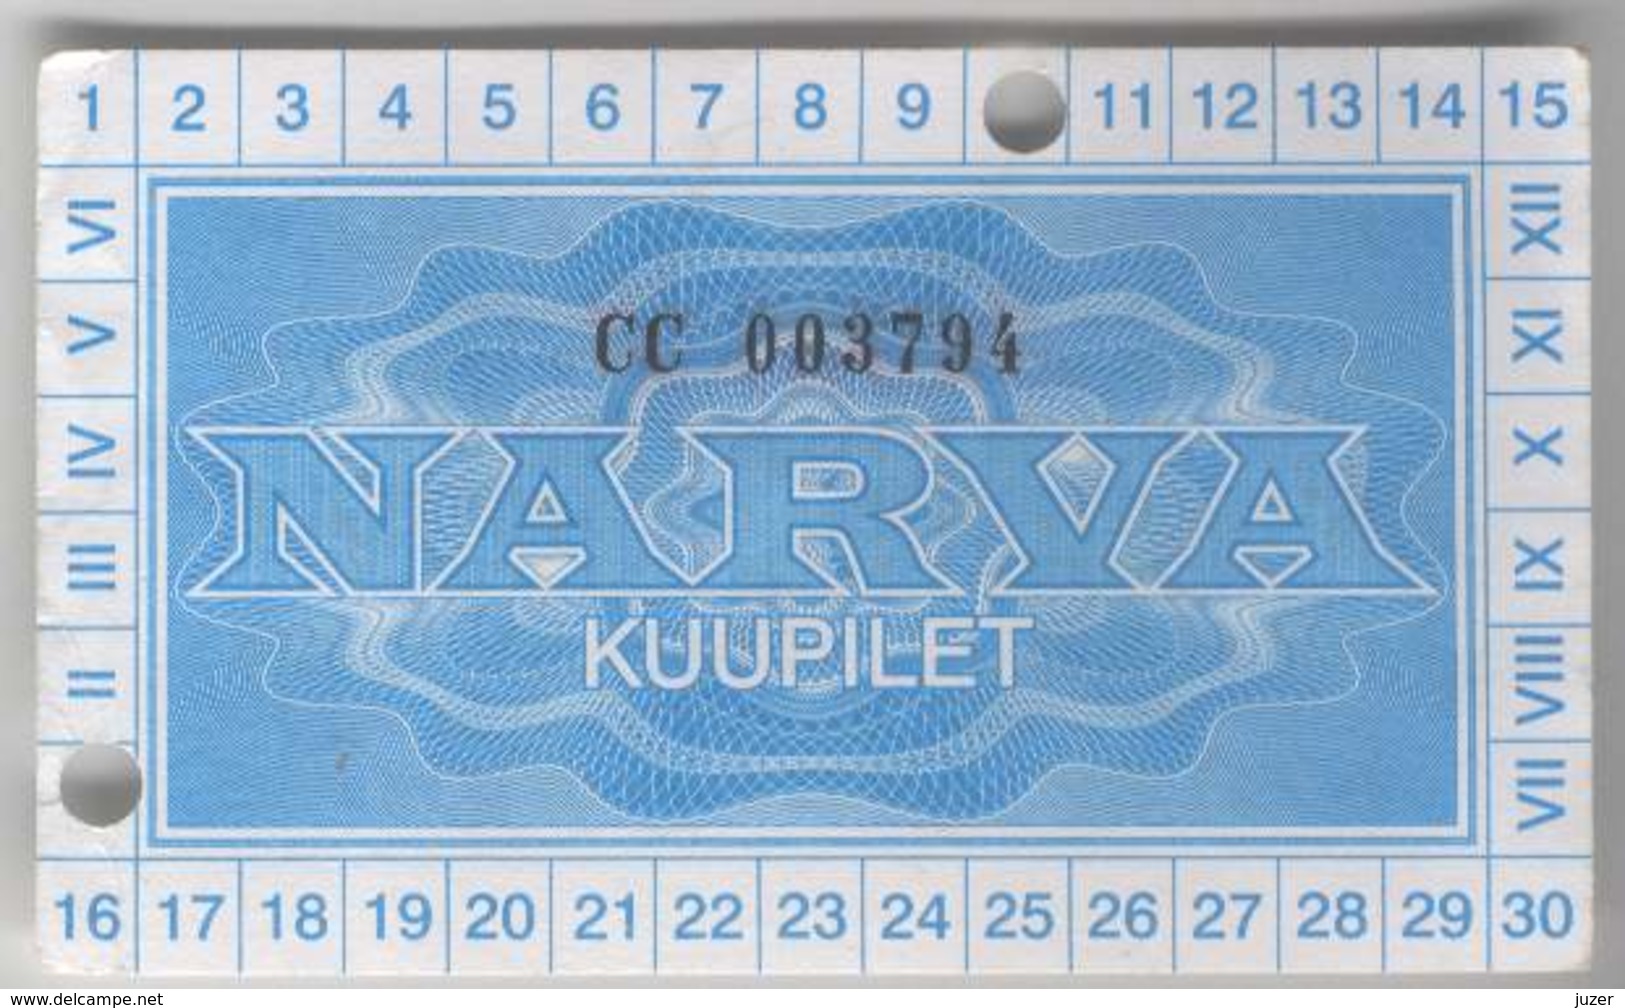 Estonia: Month Bus Ticket From Narva (11) - Europe